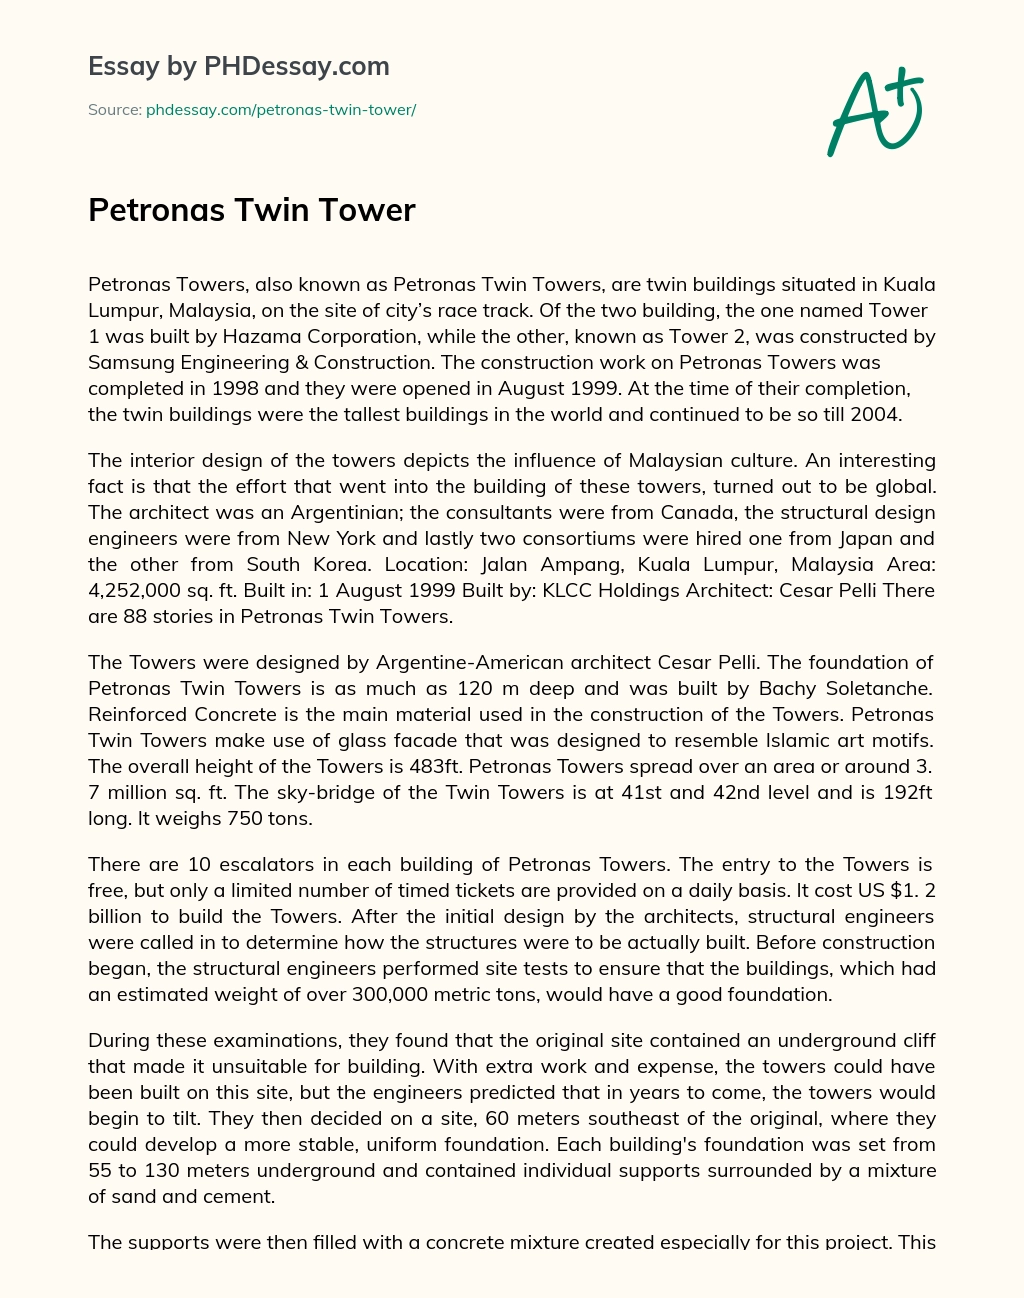 Petronas Twin Tower essay